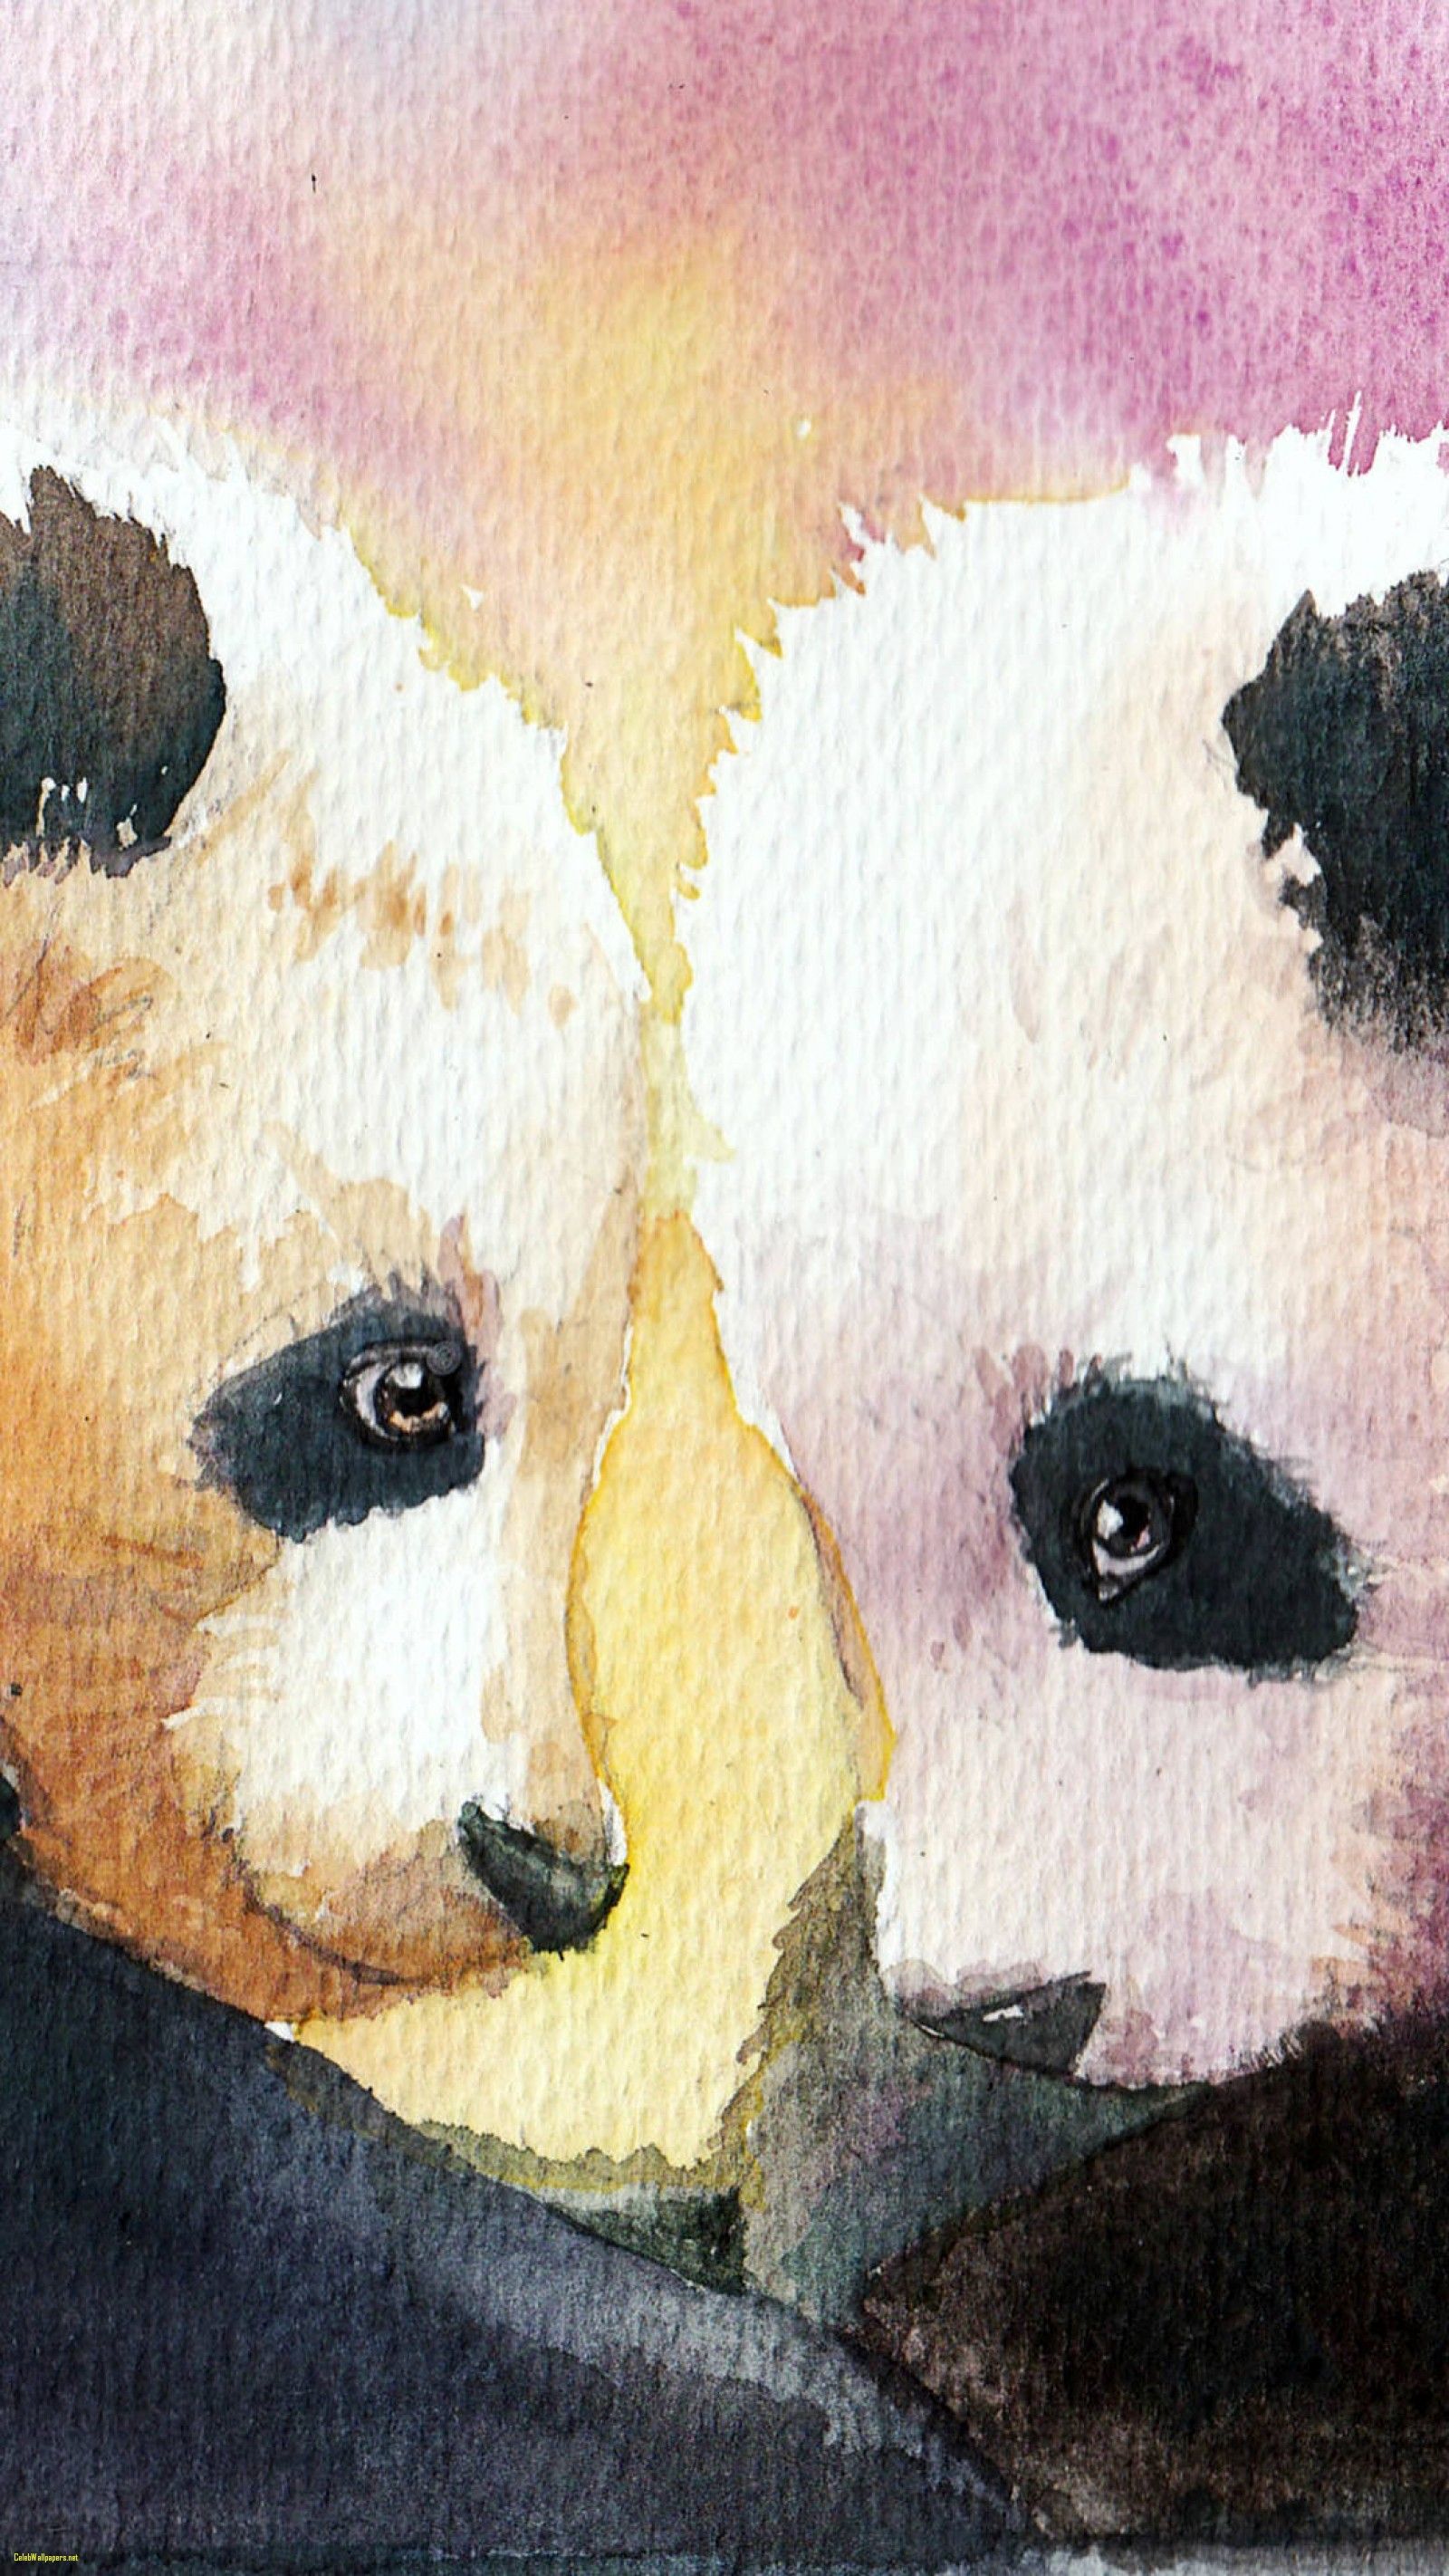 Panda Couple Wallpapers - Wallpaper Cave